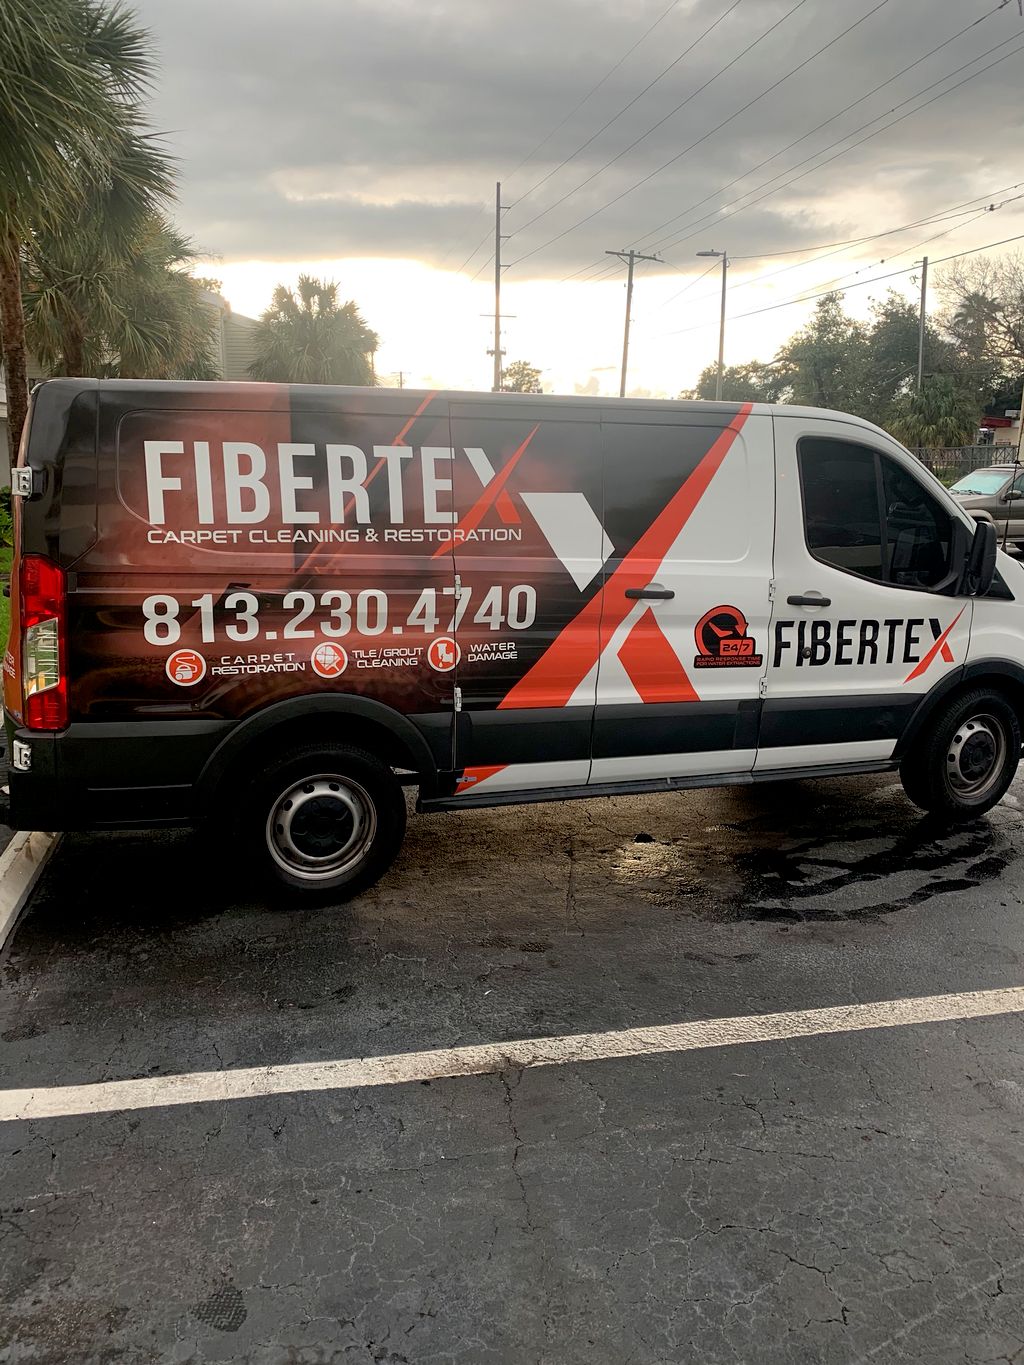 Fibertex Carpet Cleaning & Restoration